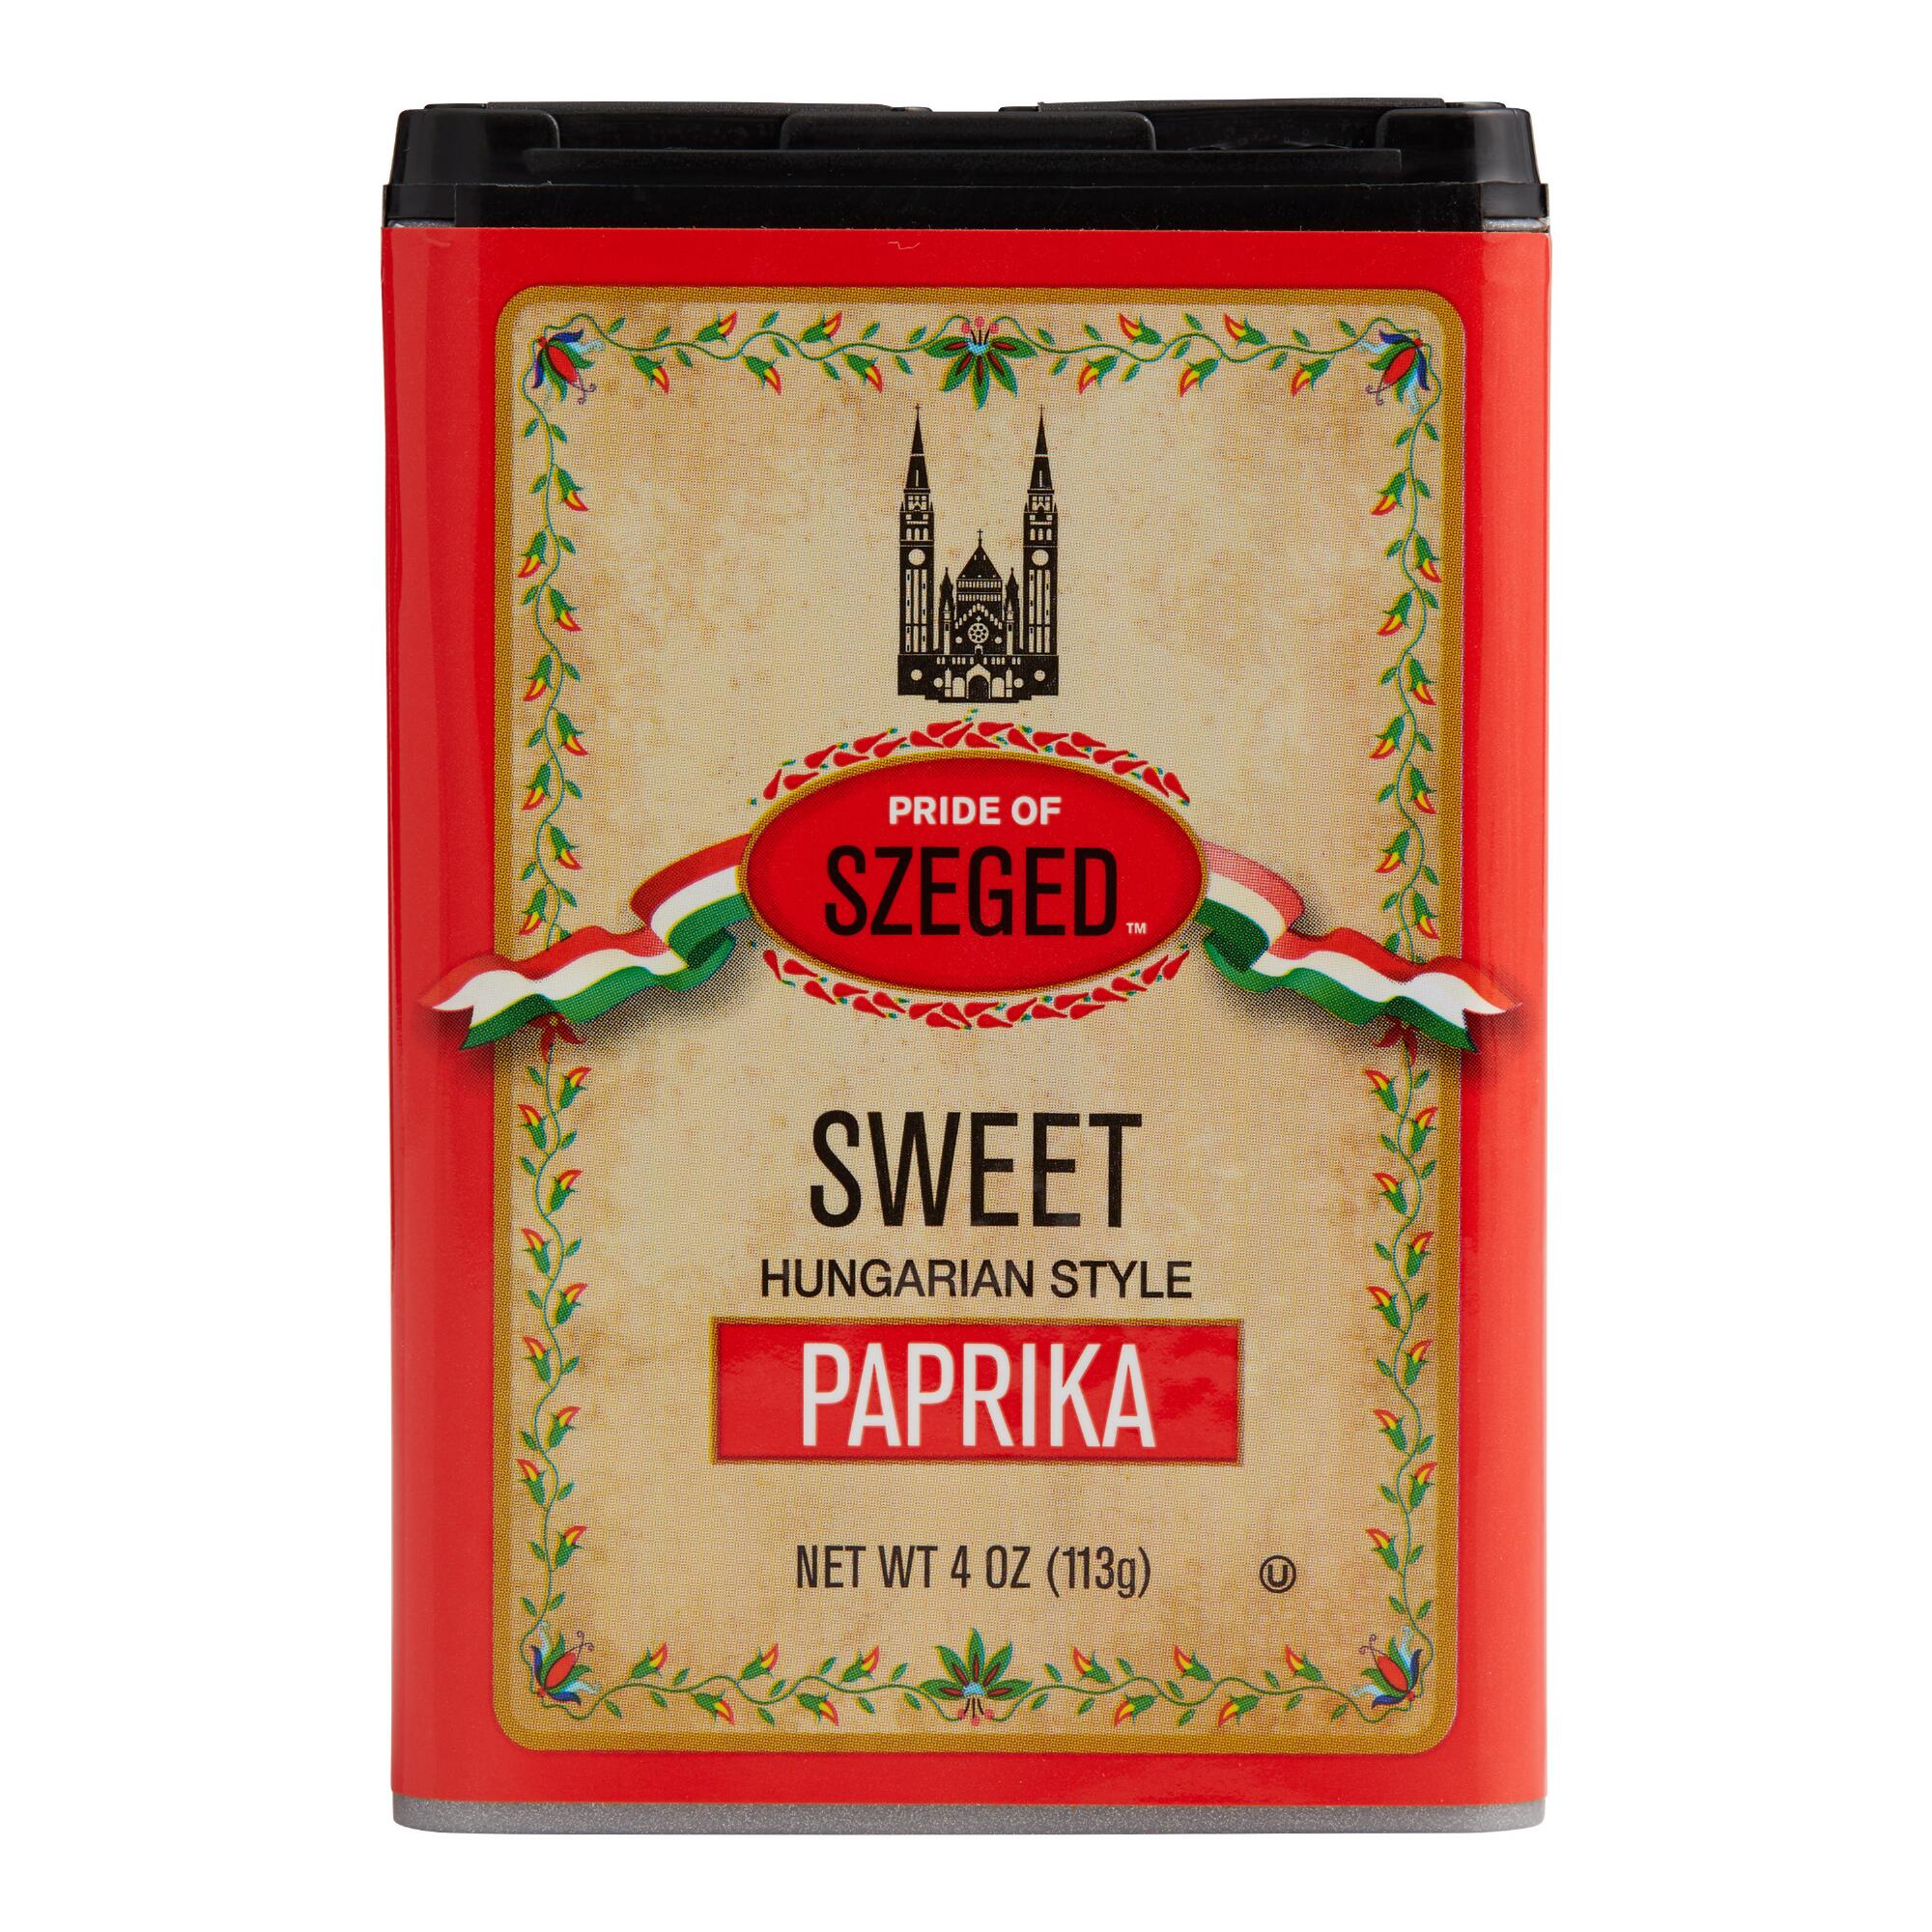 Szeged Hungarian Style Sweet Paprika by World Market